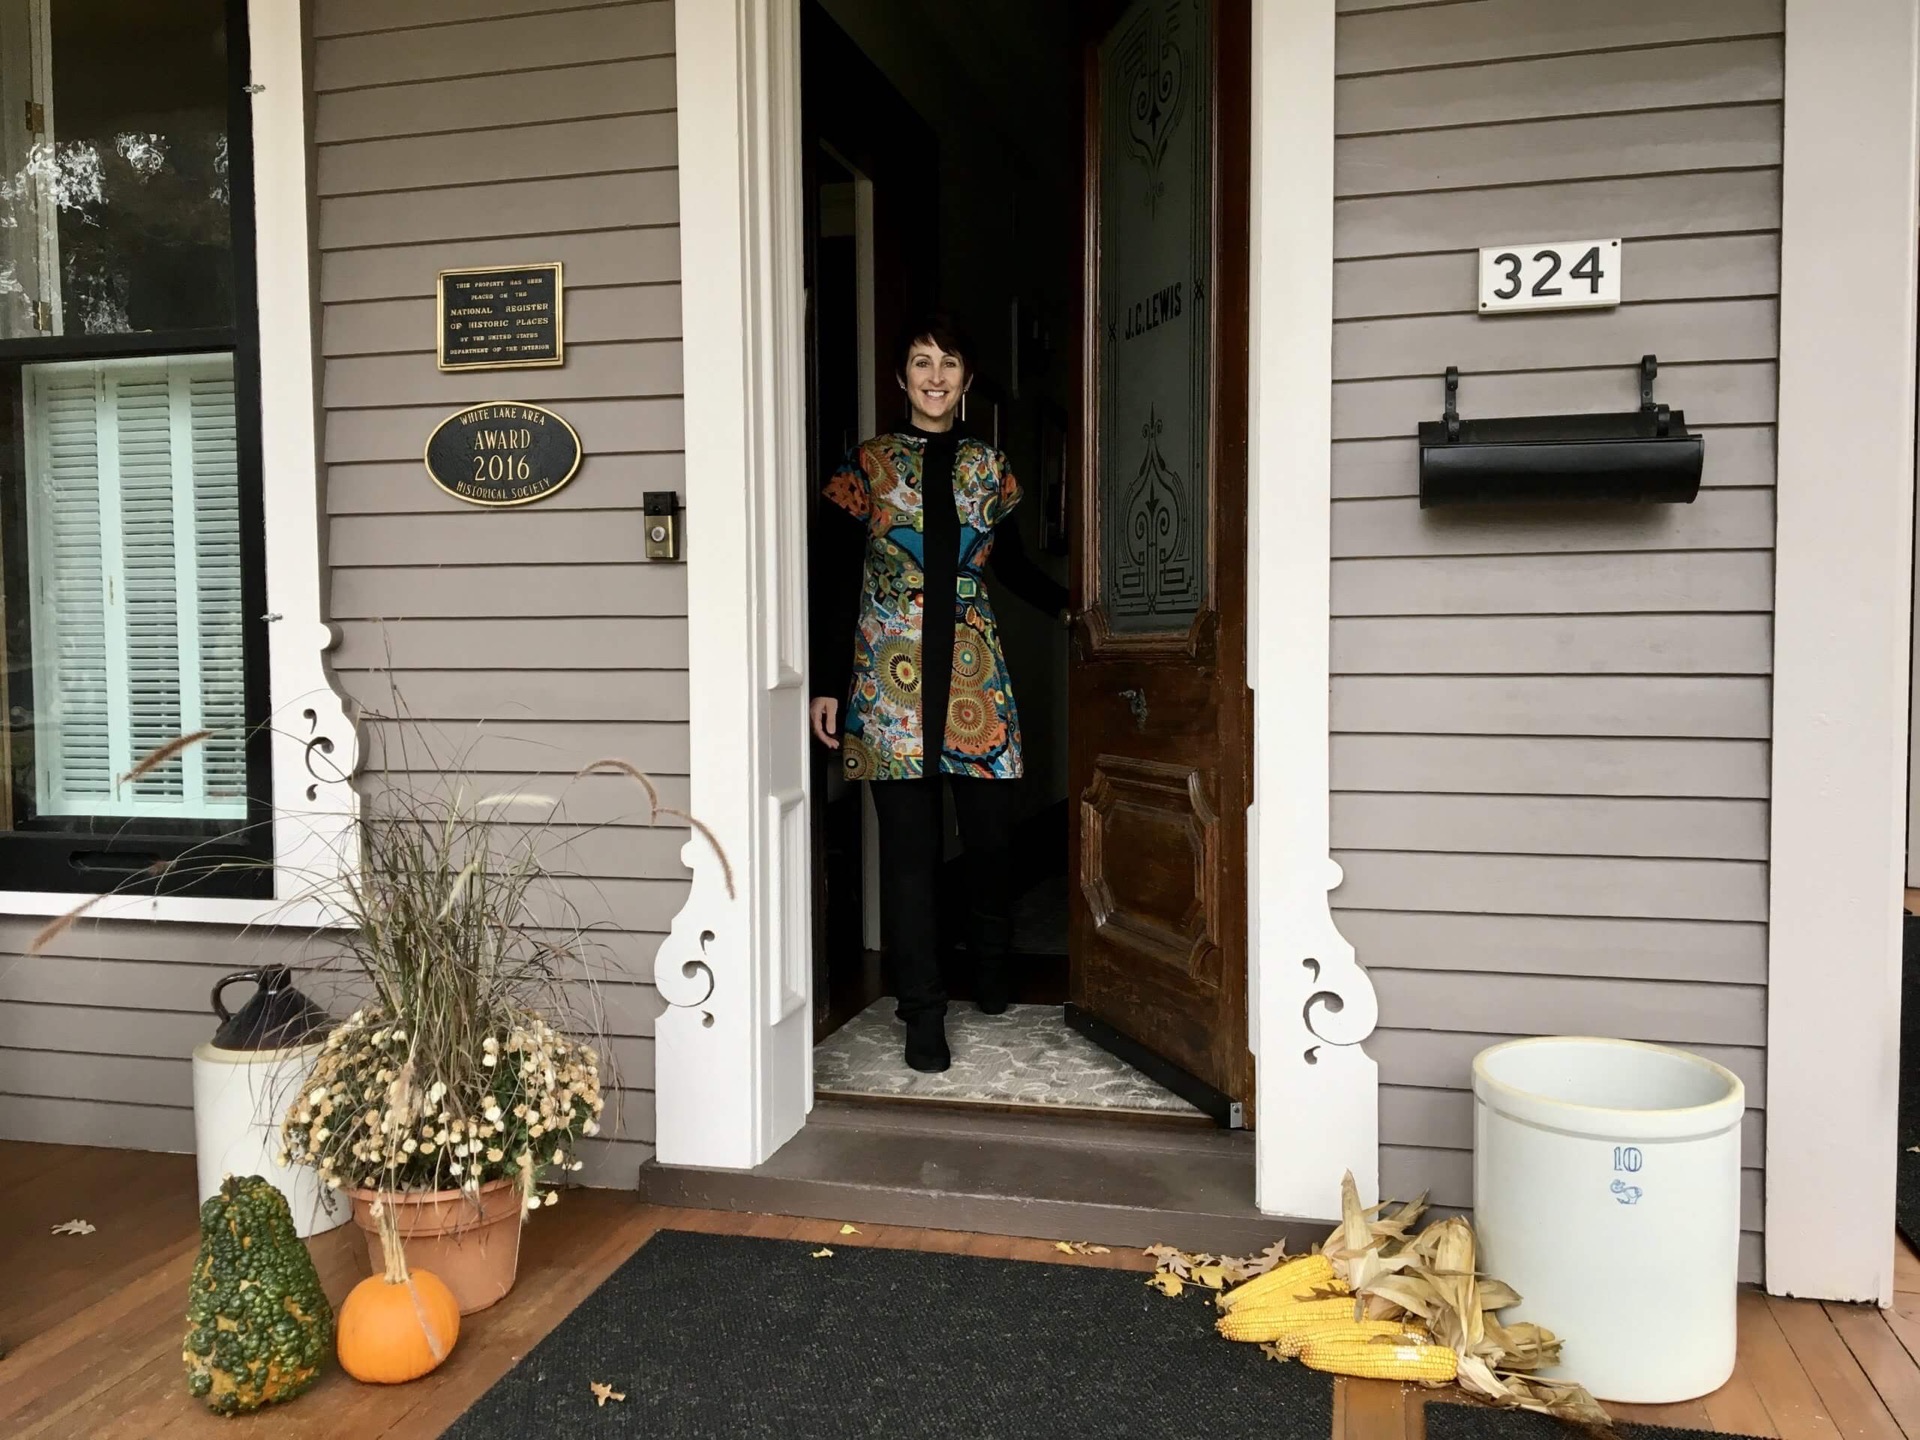 Innkeeper Debi Hillebrand of Lewis House B&B opens the door to greet guests